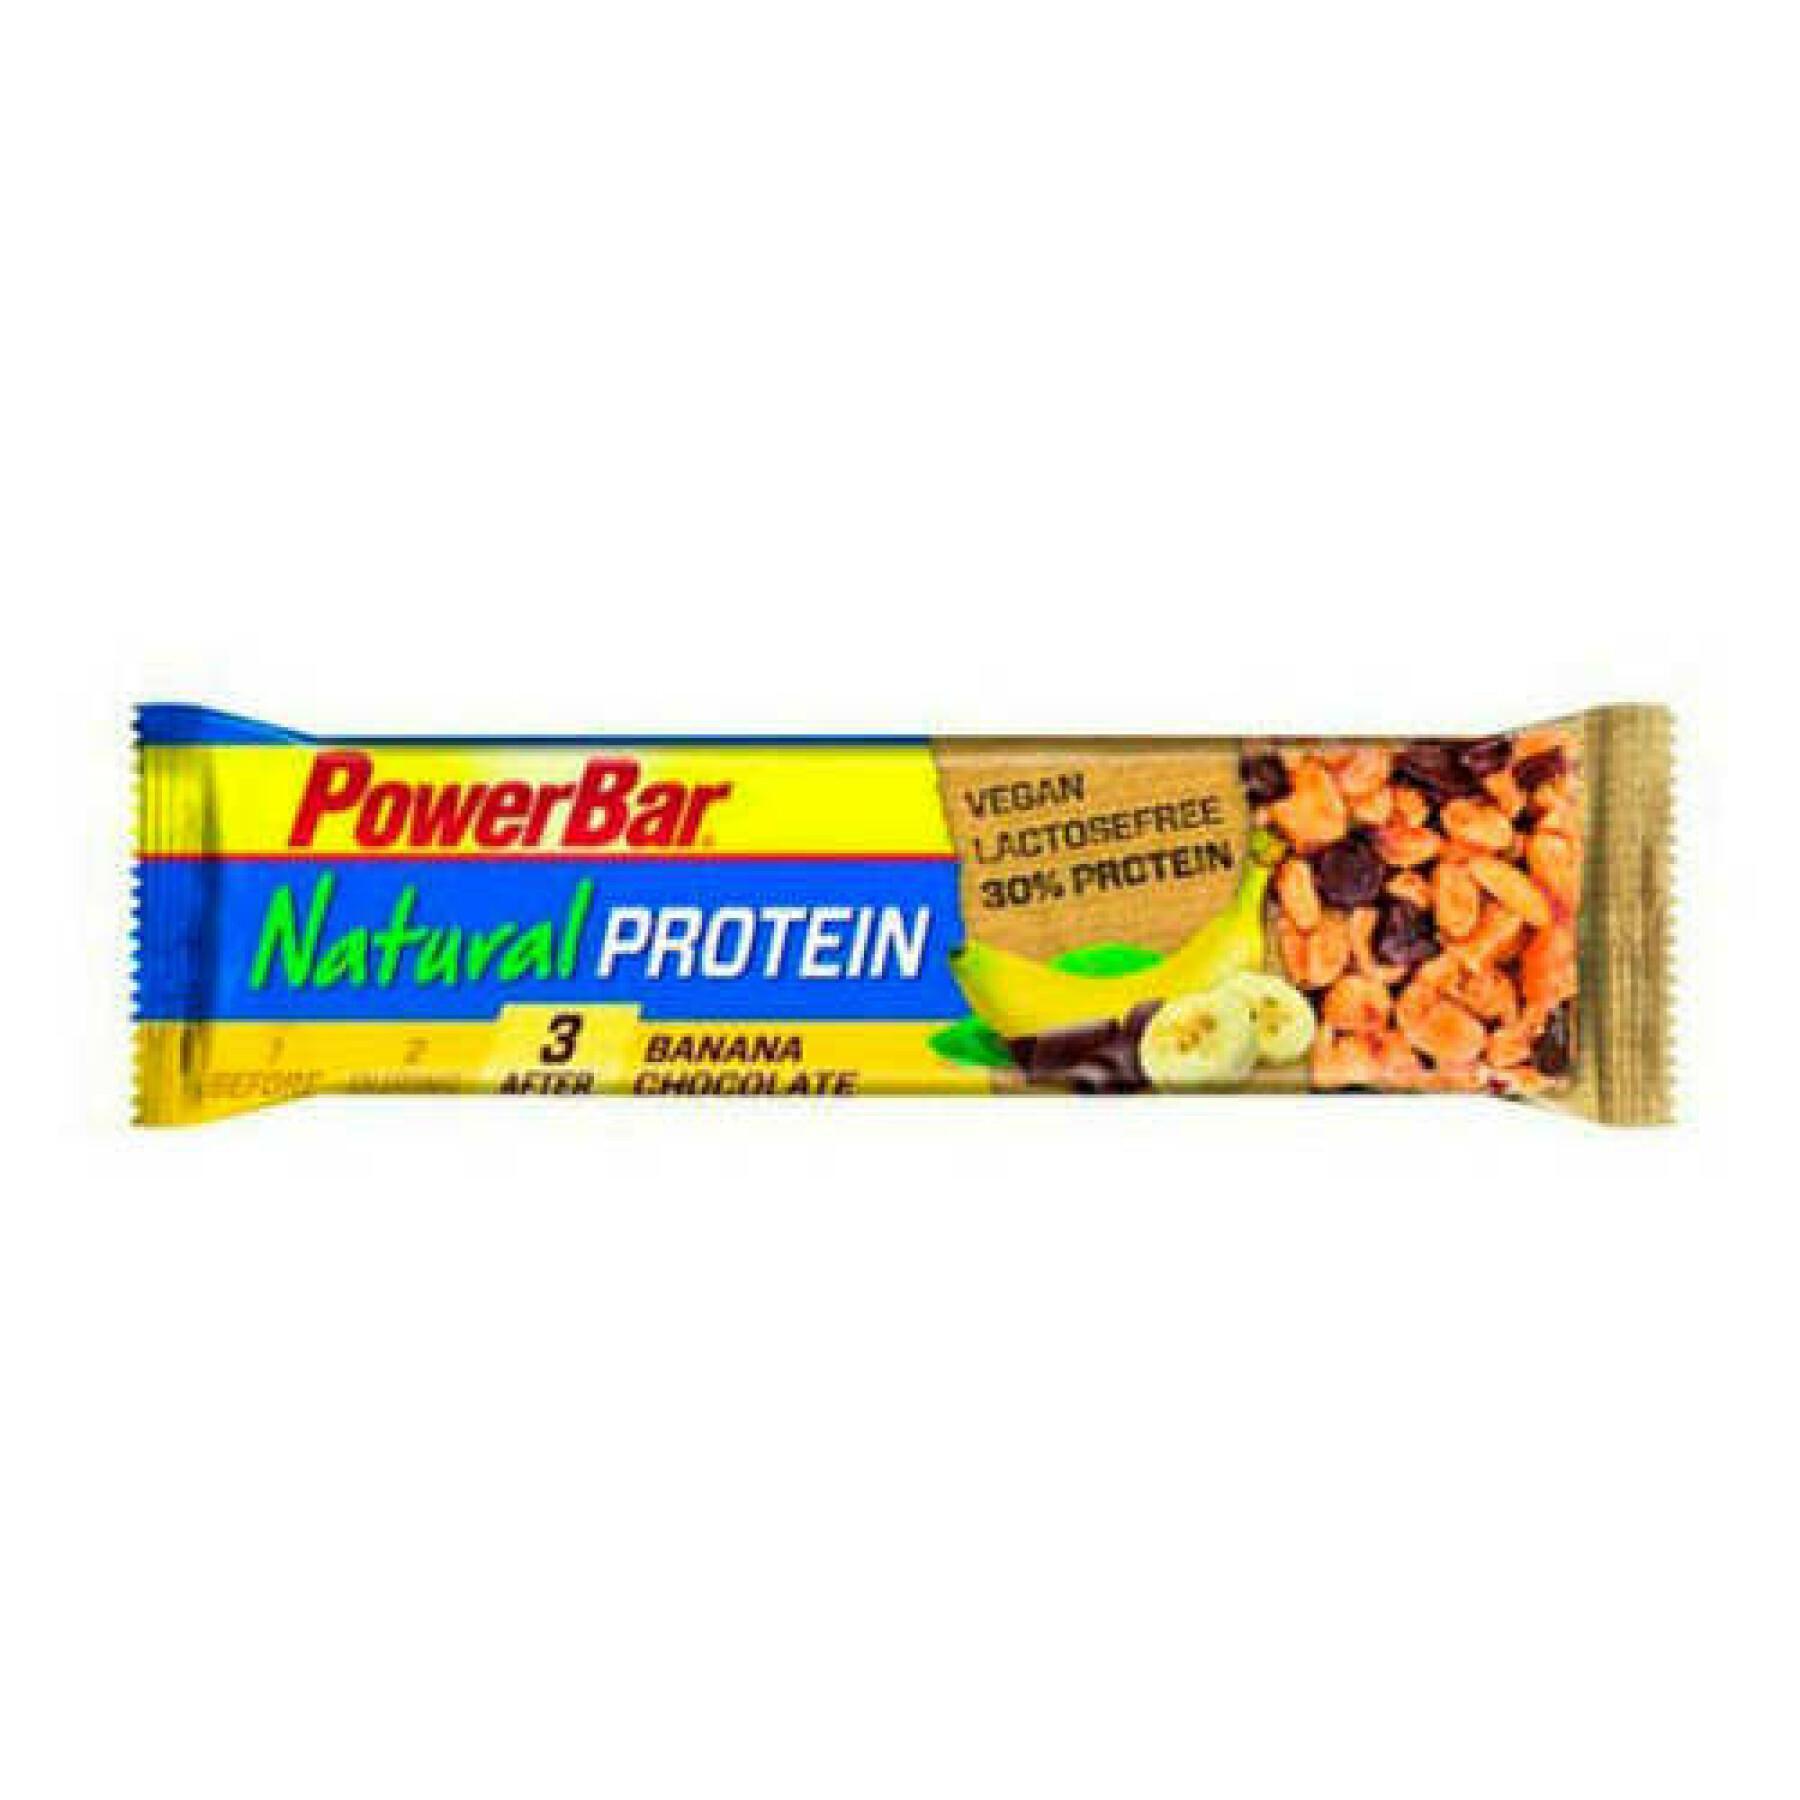 Lote de 24 bares PowerBar Natural Protein Vegan - Banana Chocolate